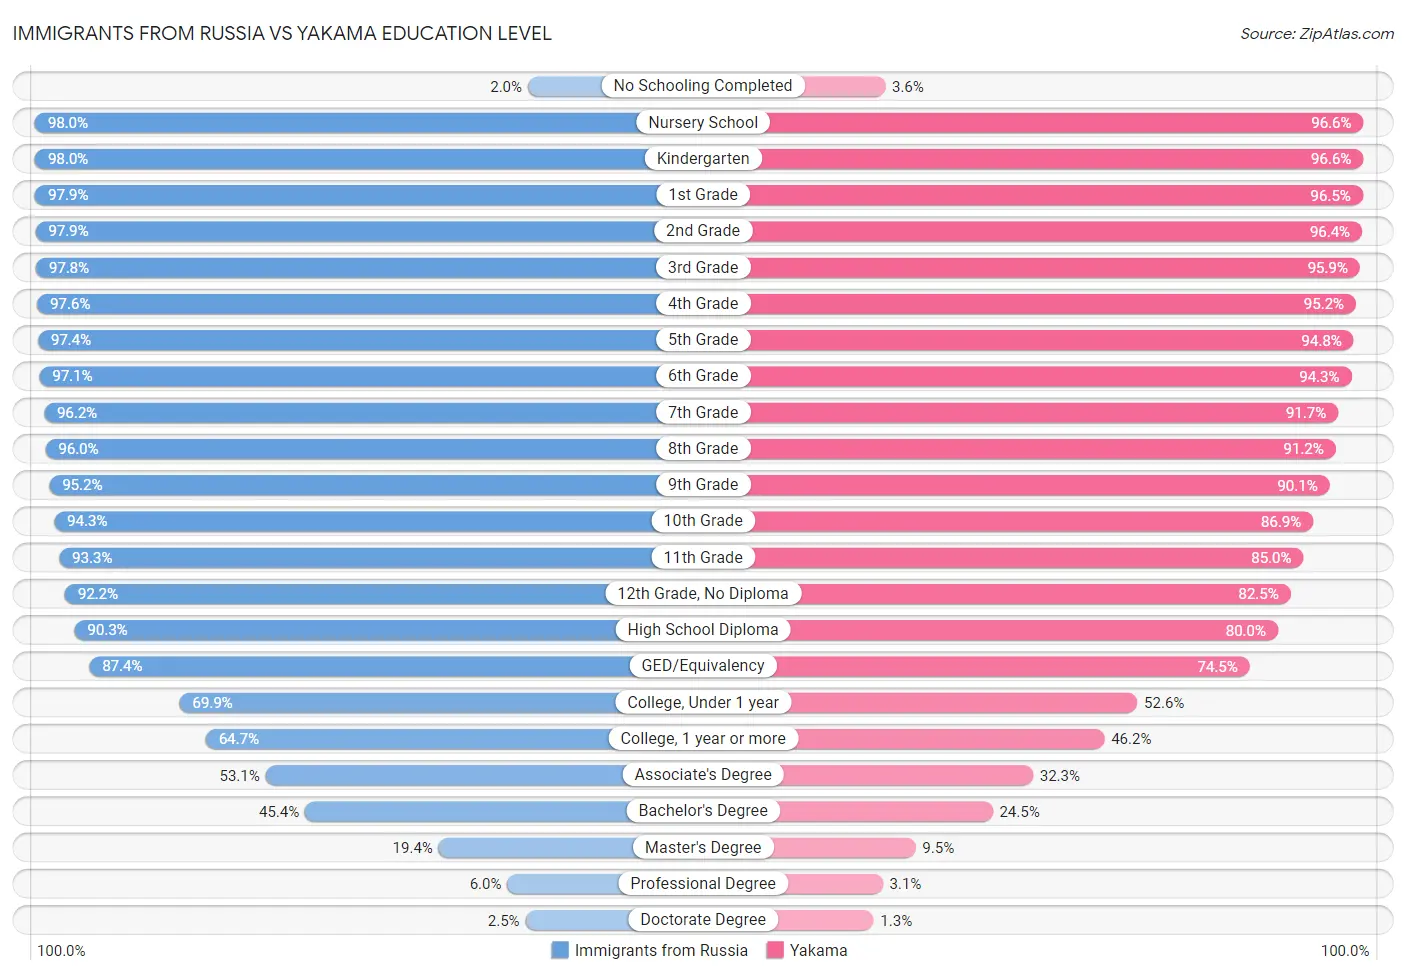 Immigrants from Russia vs Yakama Education Level